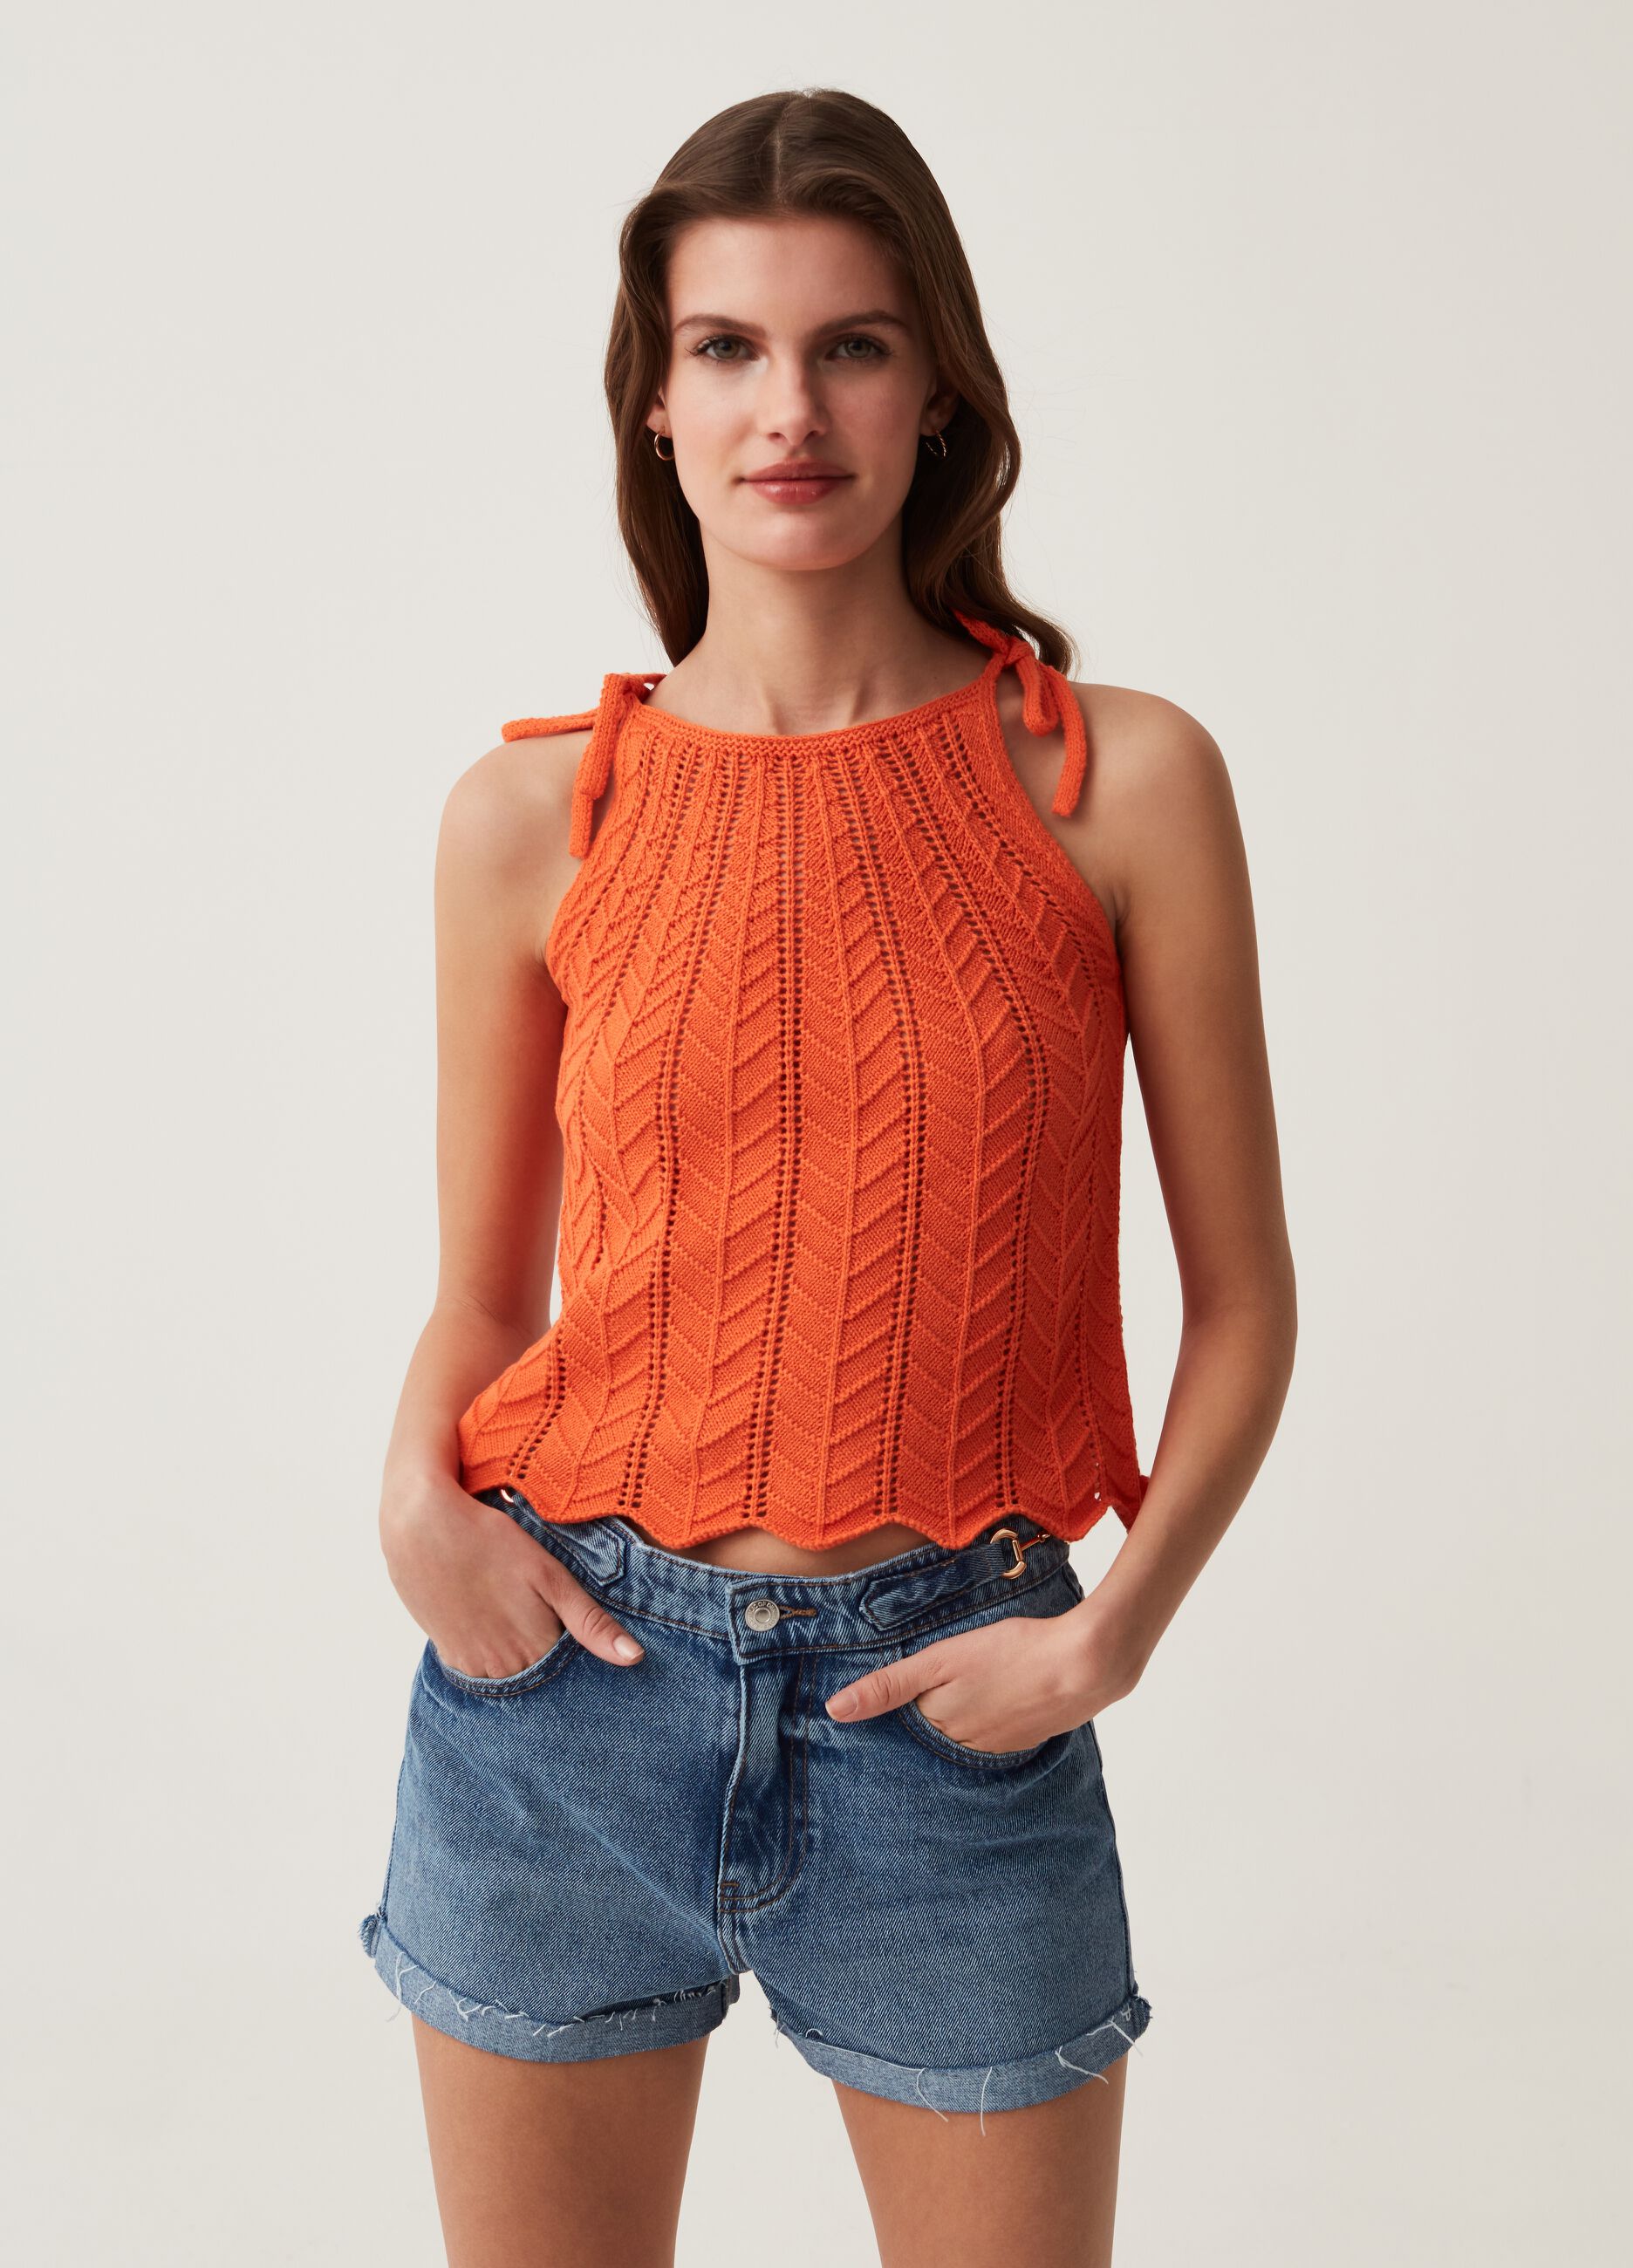 Crochet cotton tank top with halter neck.